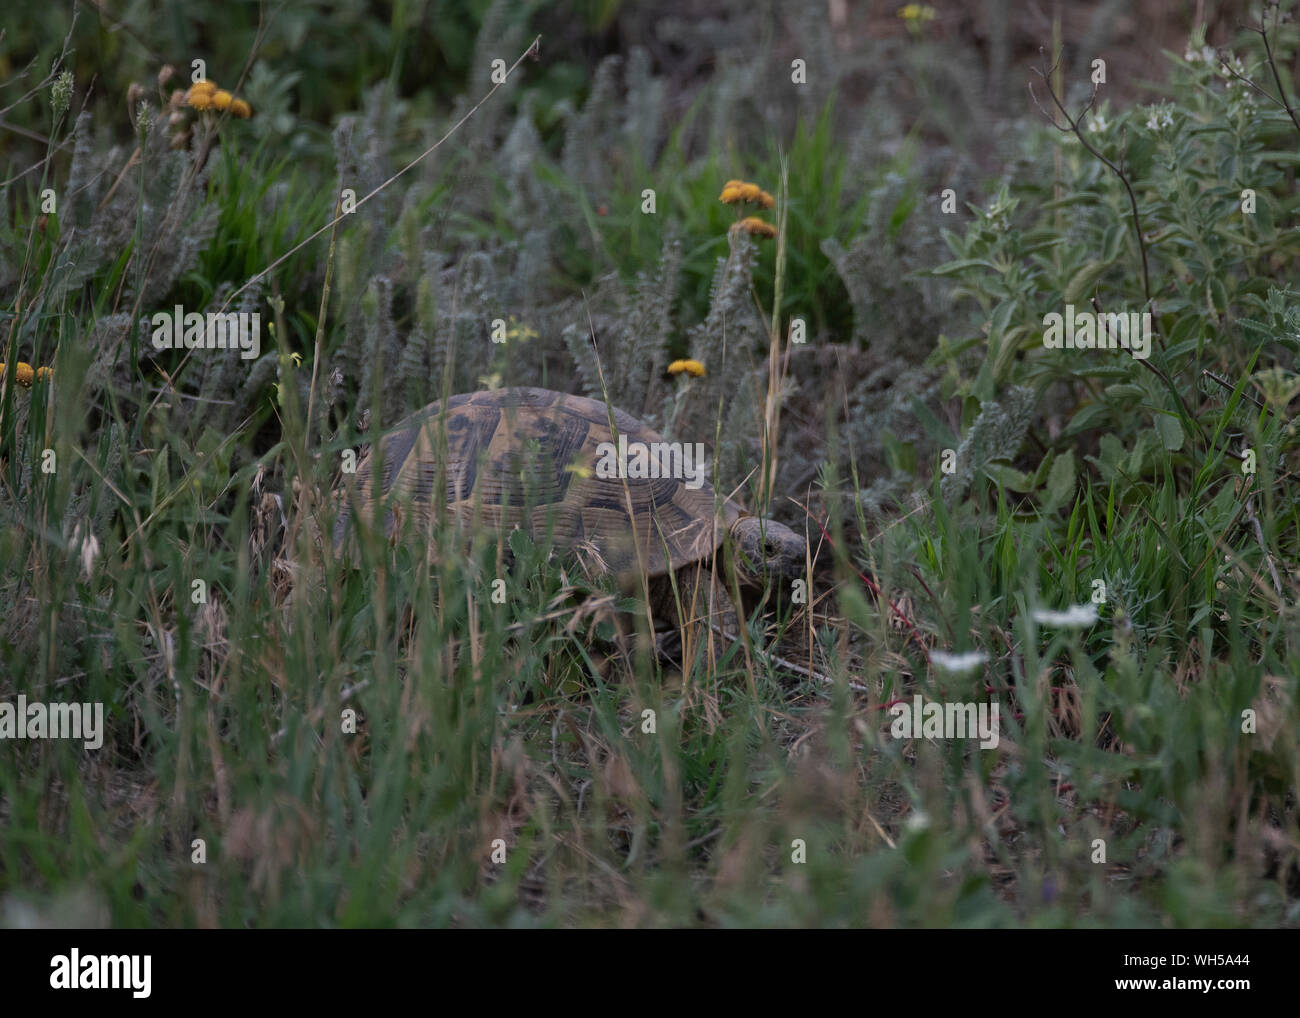 Hermanns tartaruga (Testudo hermannii) di sottobosco, Mācin montagne, Romania Foto Stock